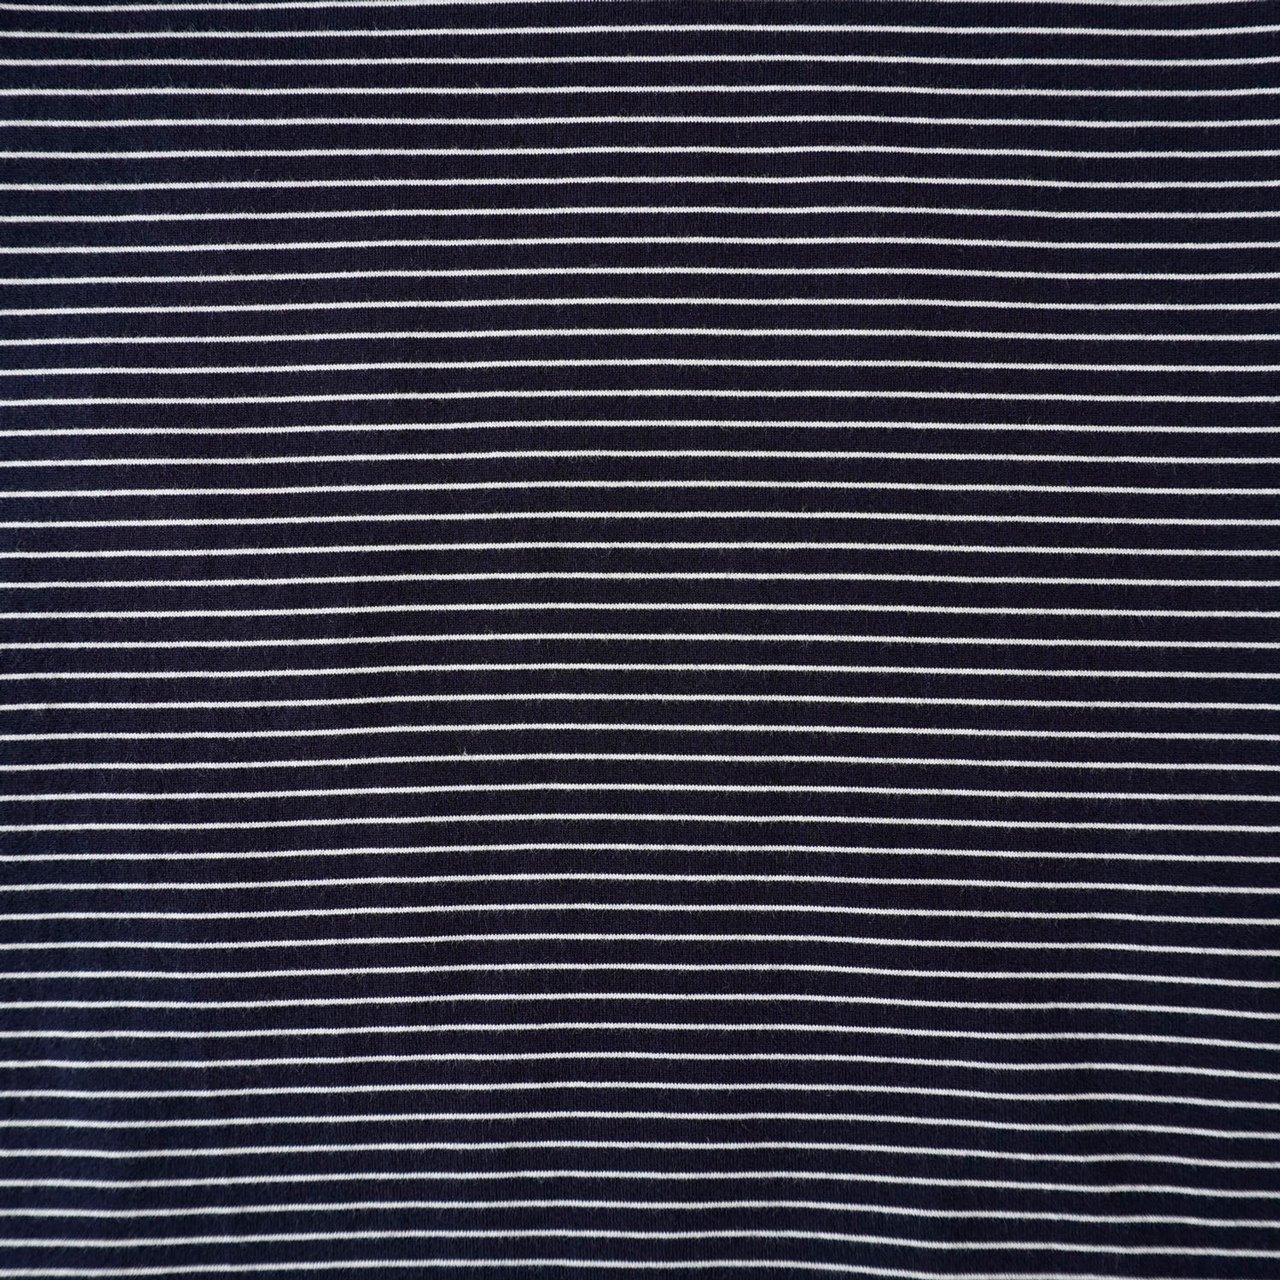 UNIVERSAL PRODUCTS.(ユニバーサルプロダクツ)24SS/春夏
ORIGINAL BORDER SLEEVE T-SHIRTS
半袖Tシャツ
ボーダーTee